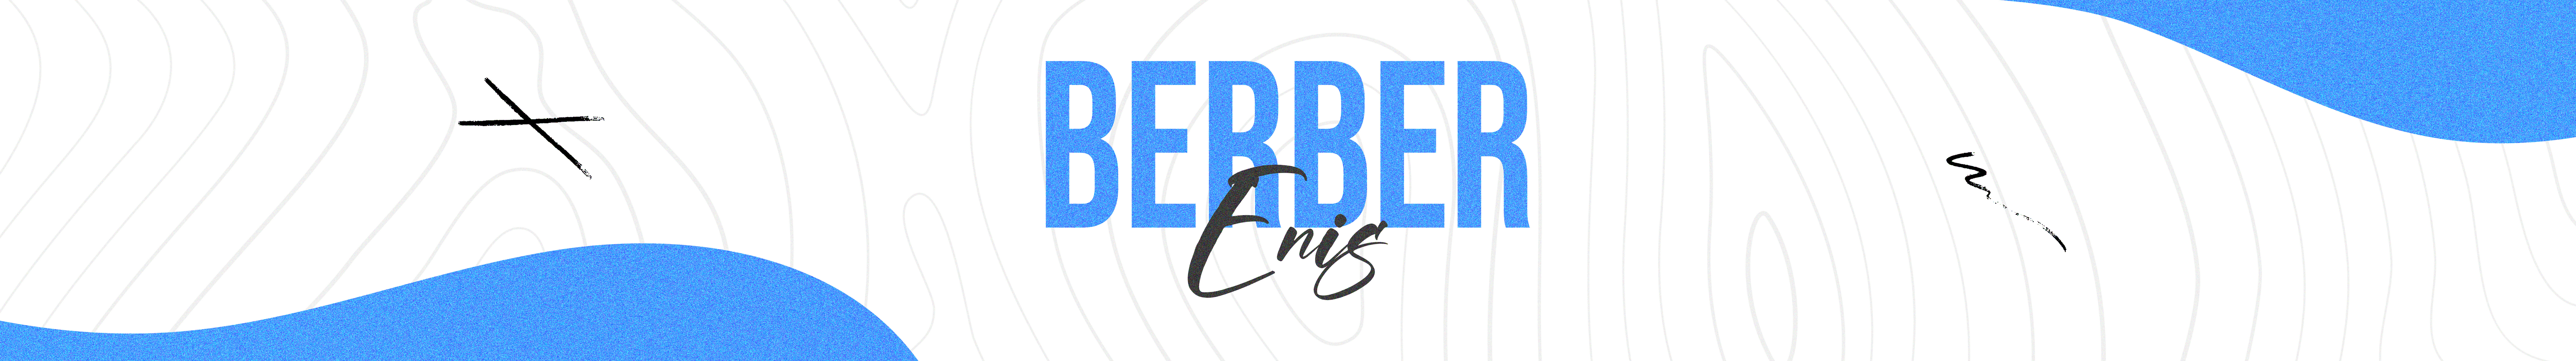 Banner de perfil de Enis Berber